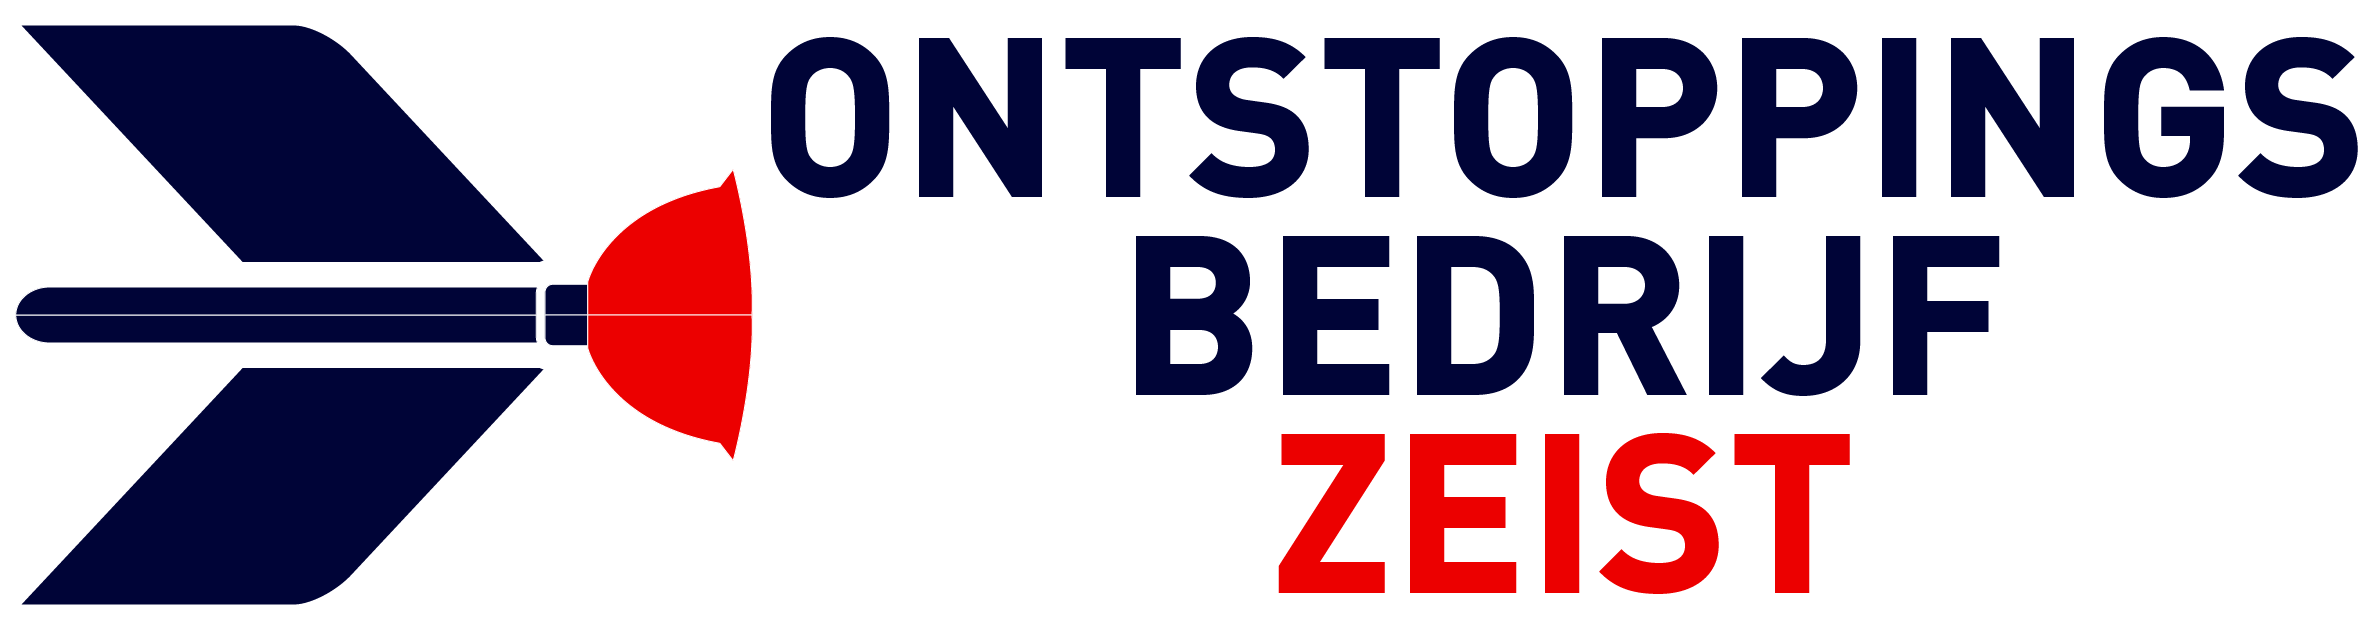 Ontstoppingsbedrijf Zeist logo